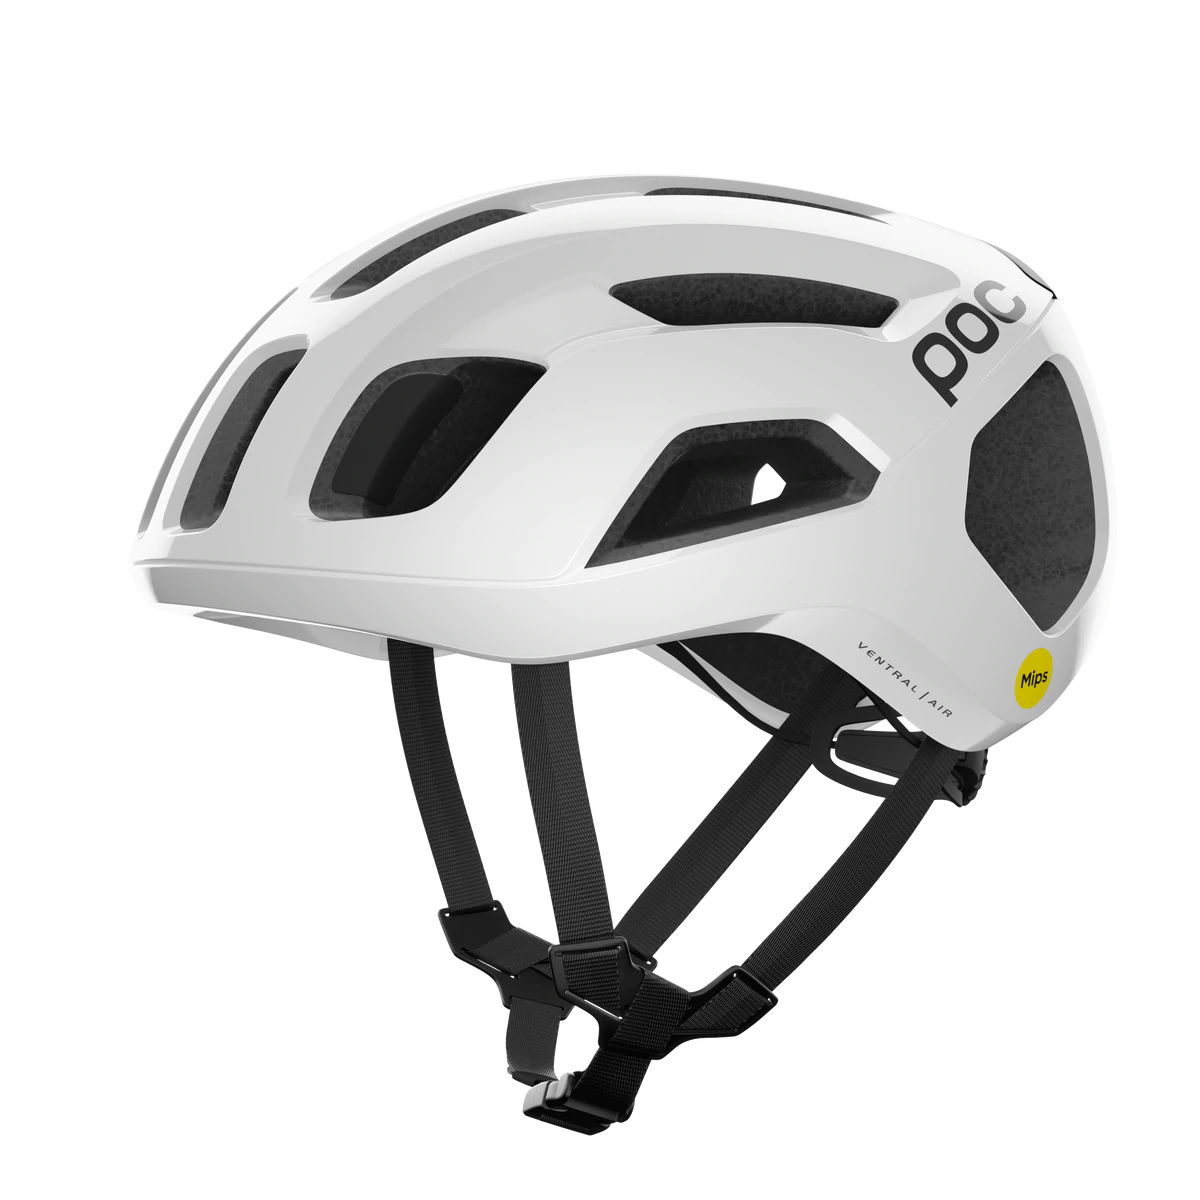 JCF公認ロードバイク用ヘルメット 10767-1001 ベントラルエアミップス アジアンフィット Ventral Air Mips Asianfit - Hydrogen White [ユニセックス]